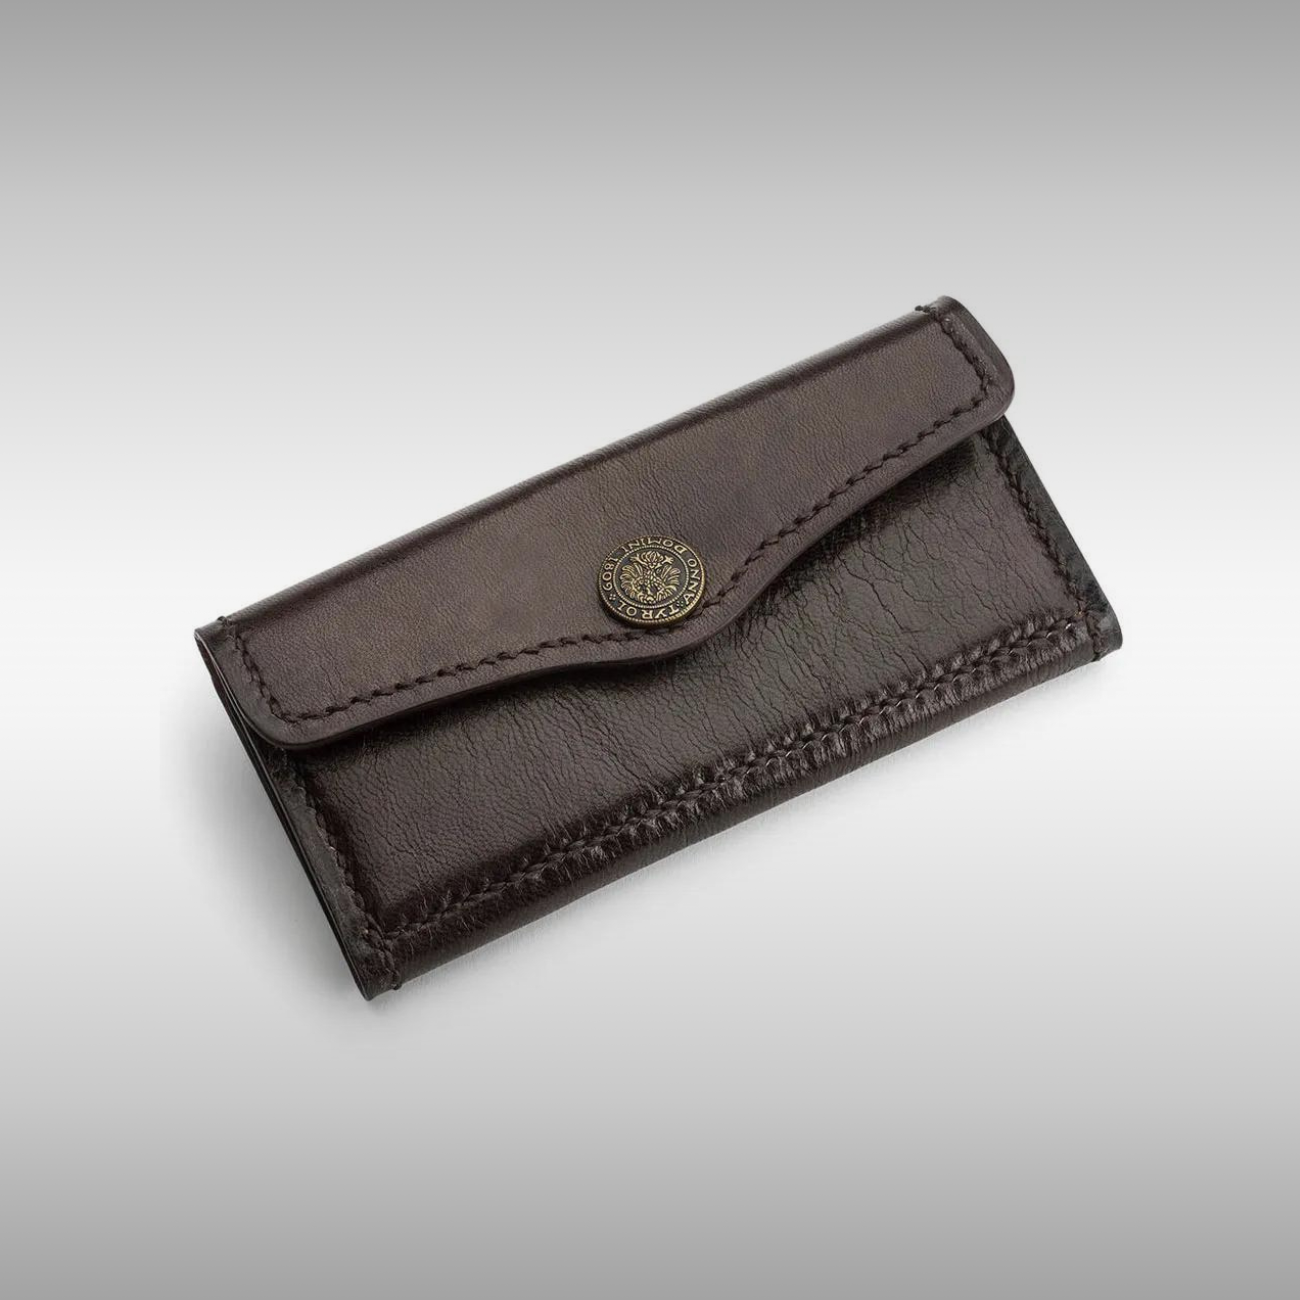 Garrick leather watch wallet